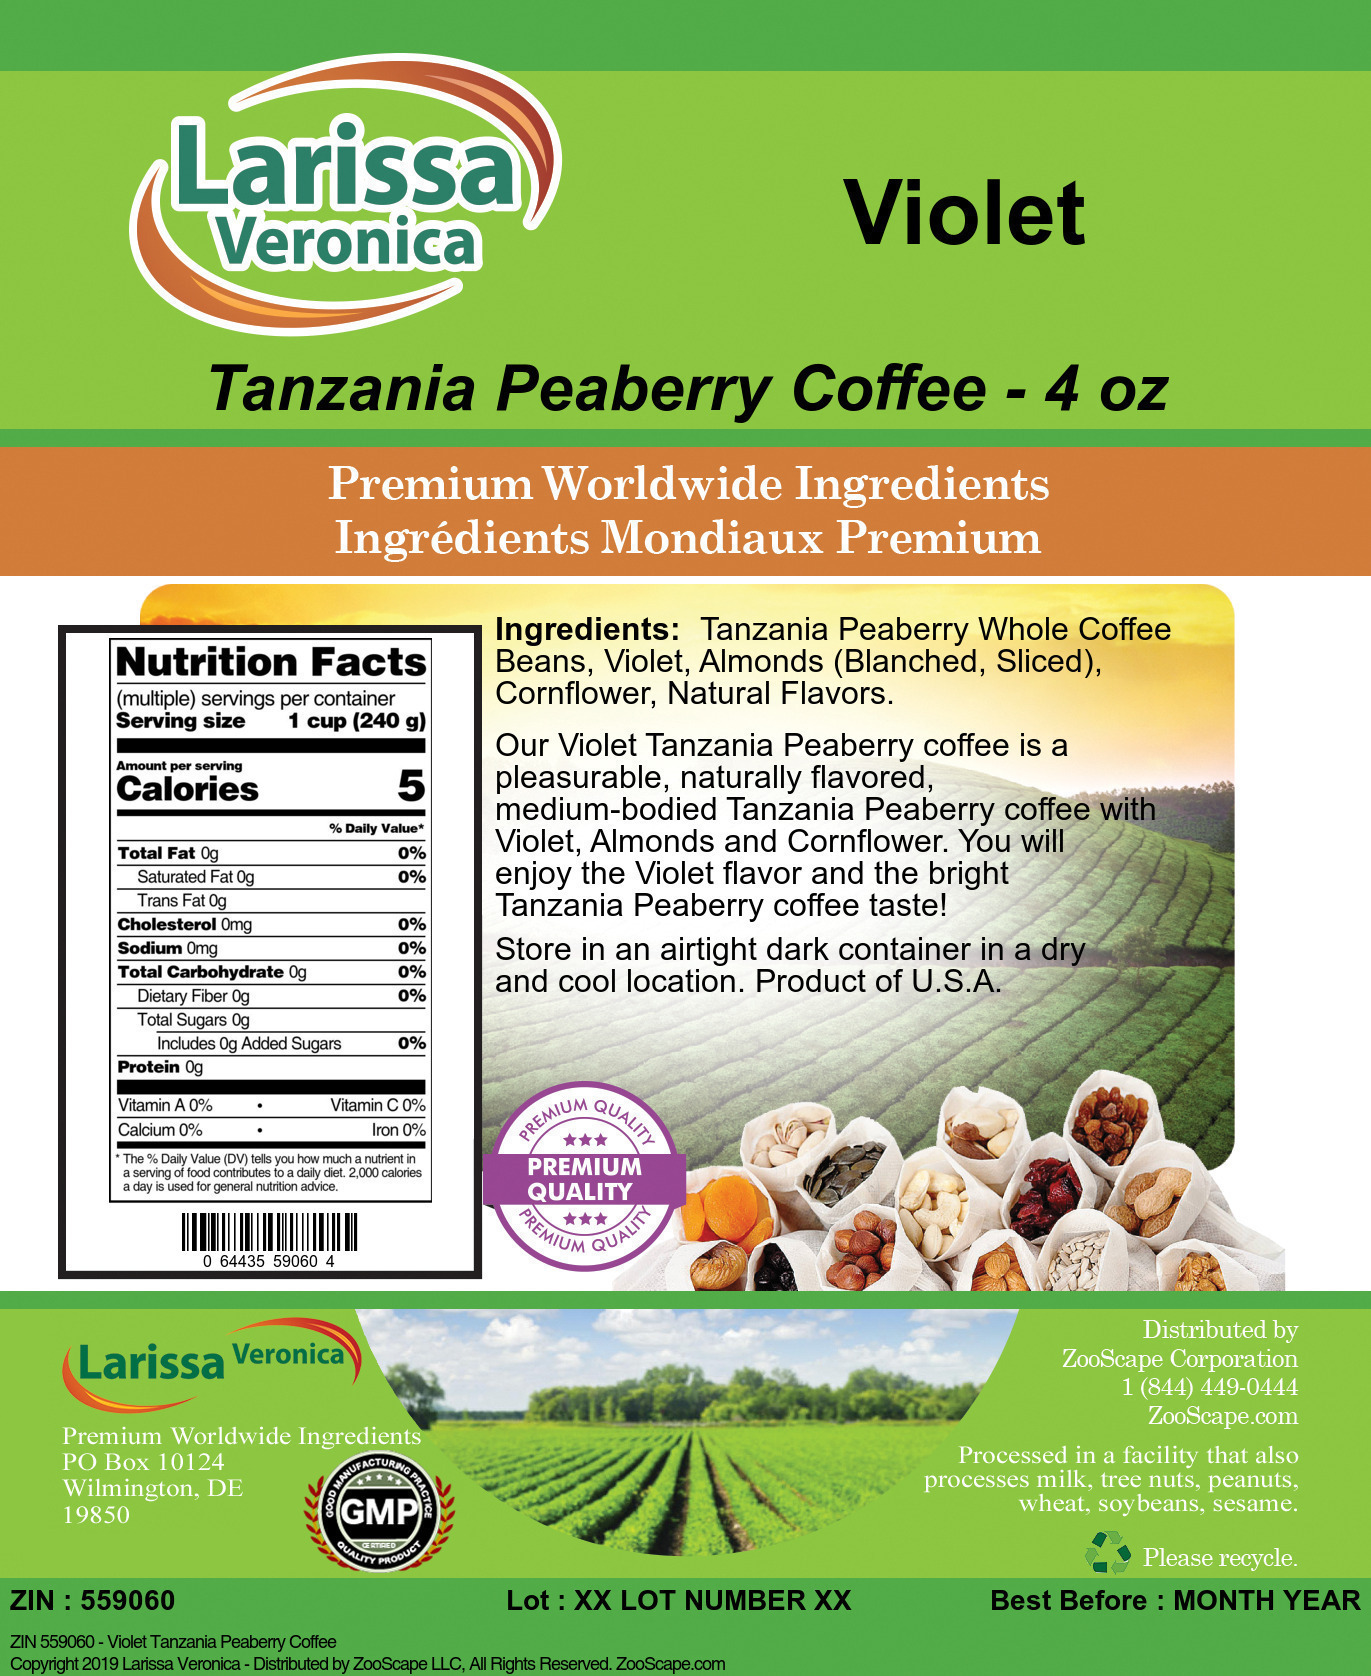 Violet Tanzania Peaberry Coffee - Label